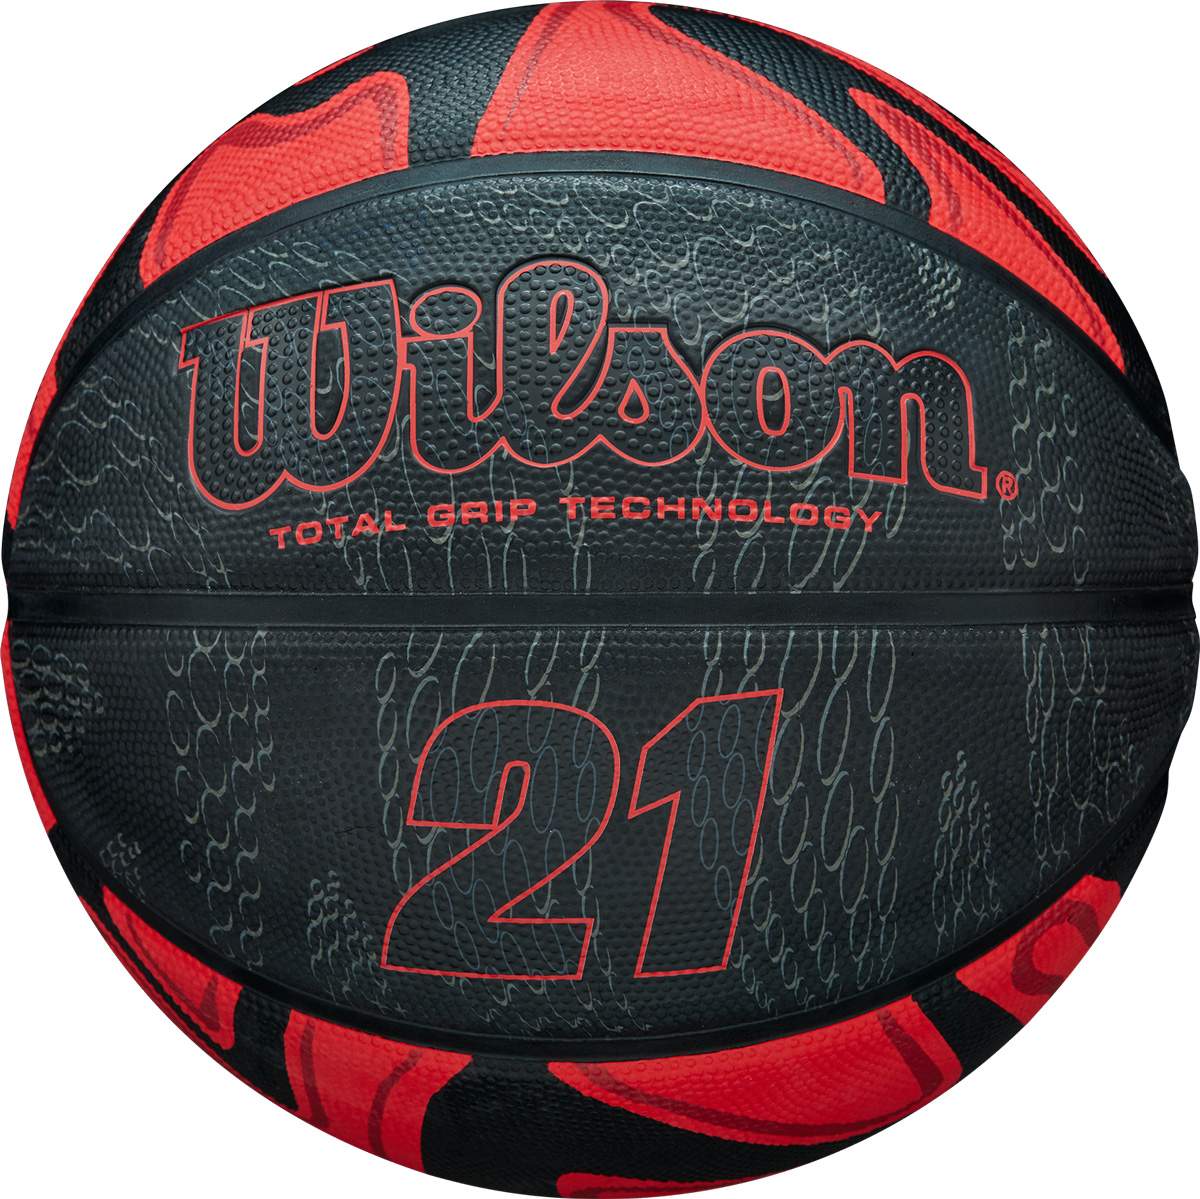 Wilson 21 SERIES